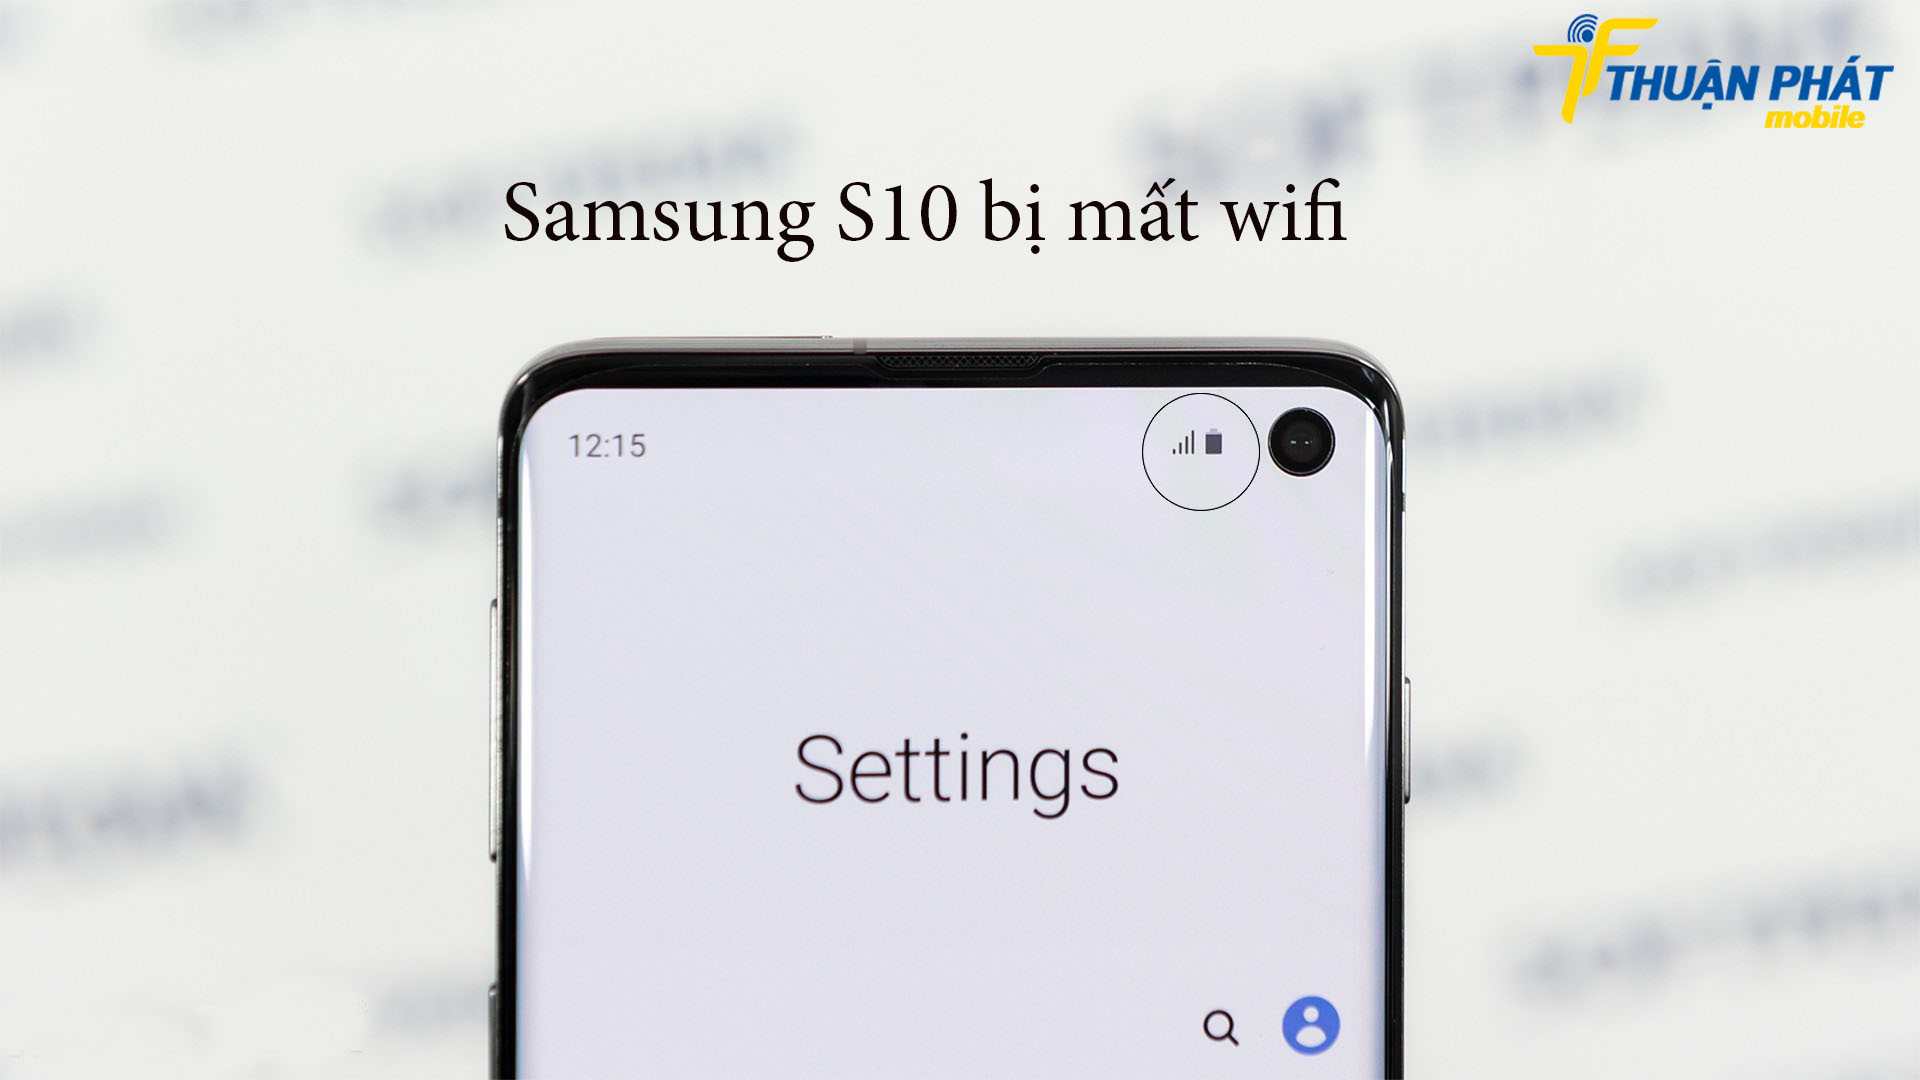 Samsung S10 bị mất wifi